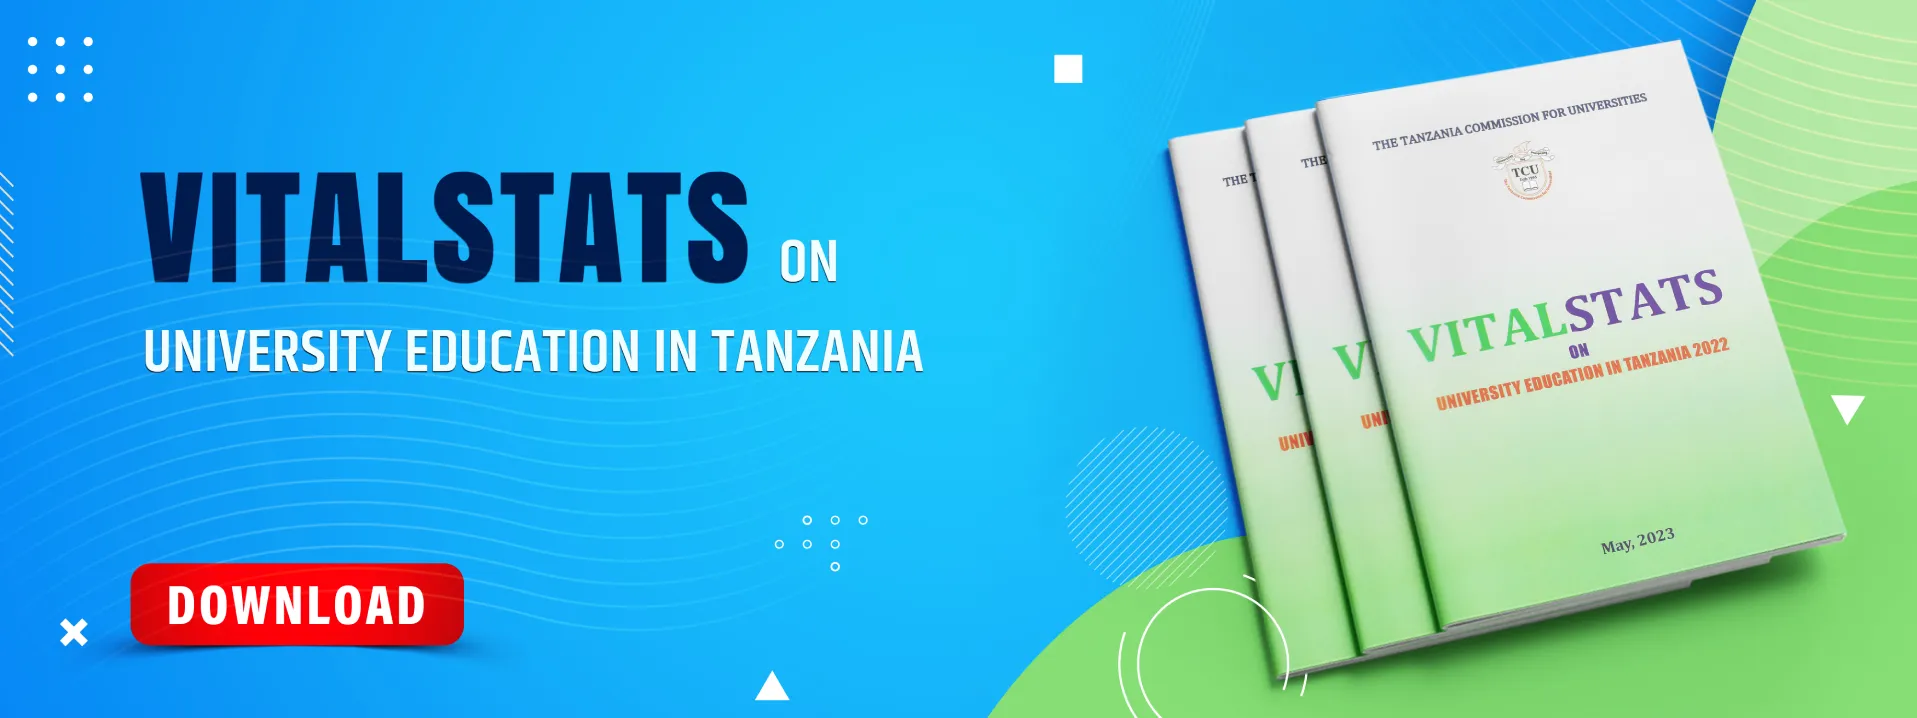 Vital Stats on University Education in Tanzania